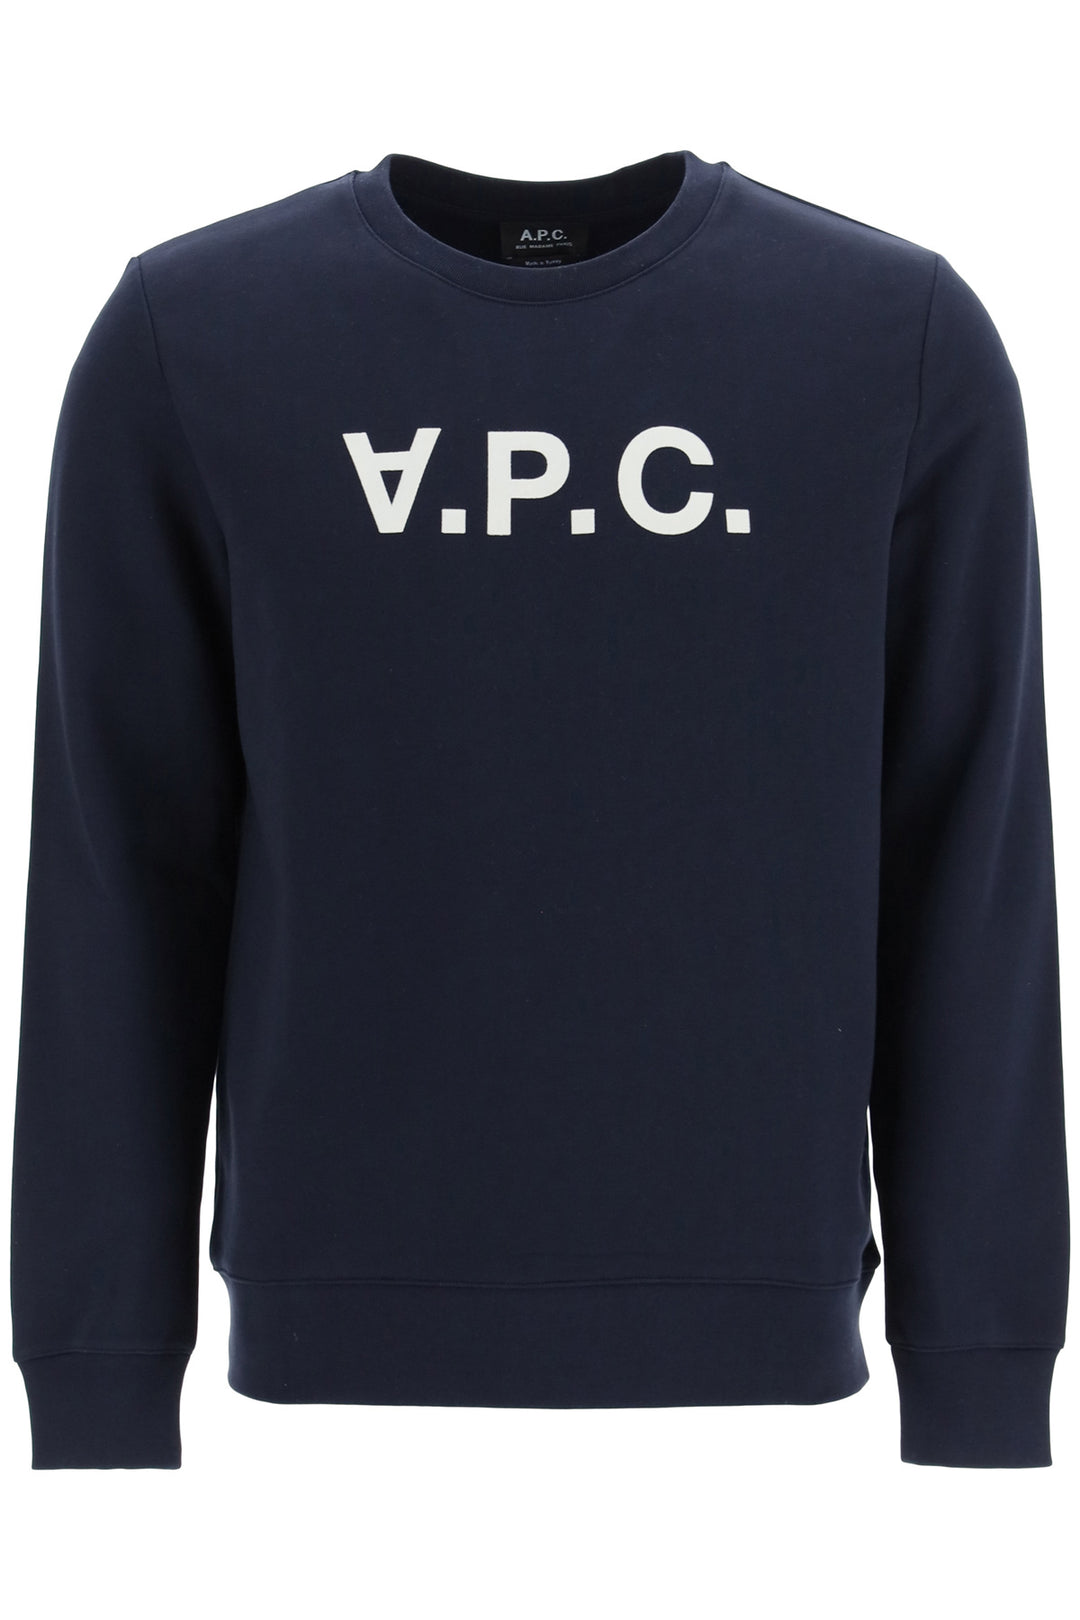 A.P.C. Flock V.P.C. Logo Sweatshirt   Blue